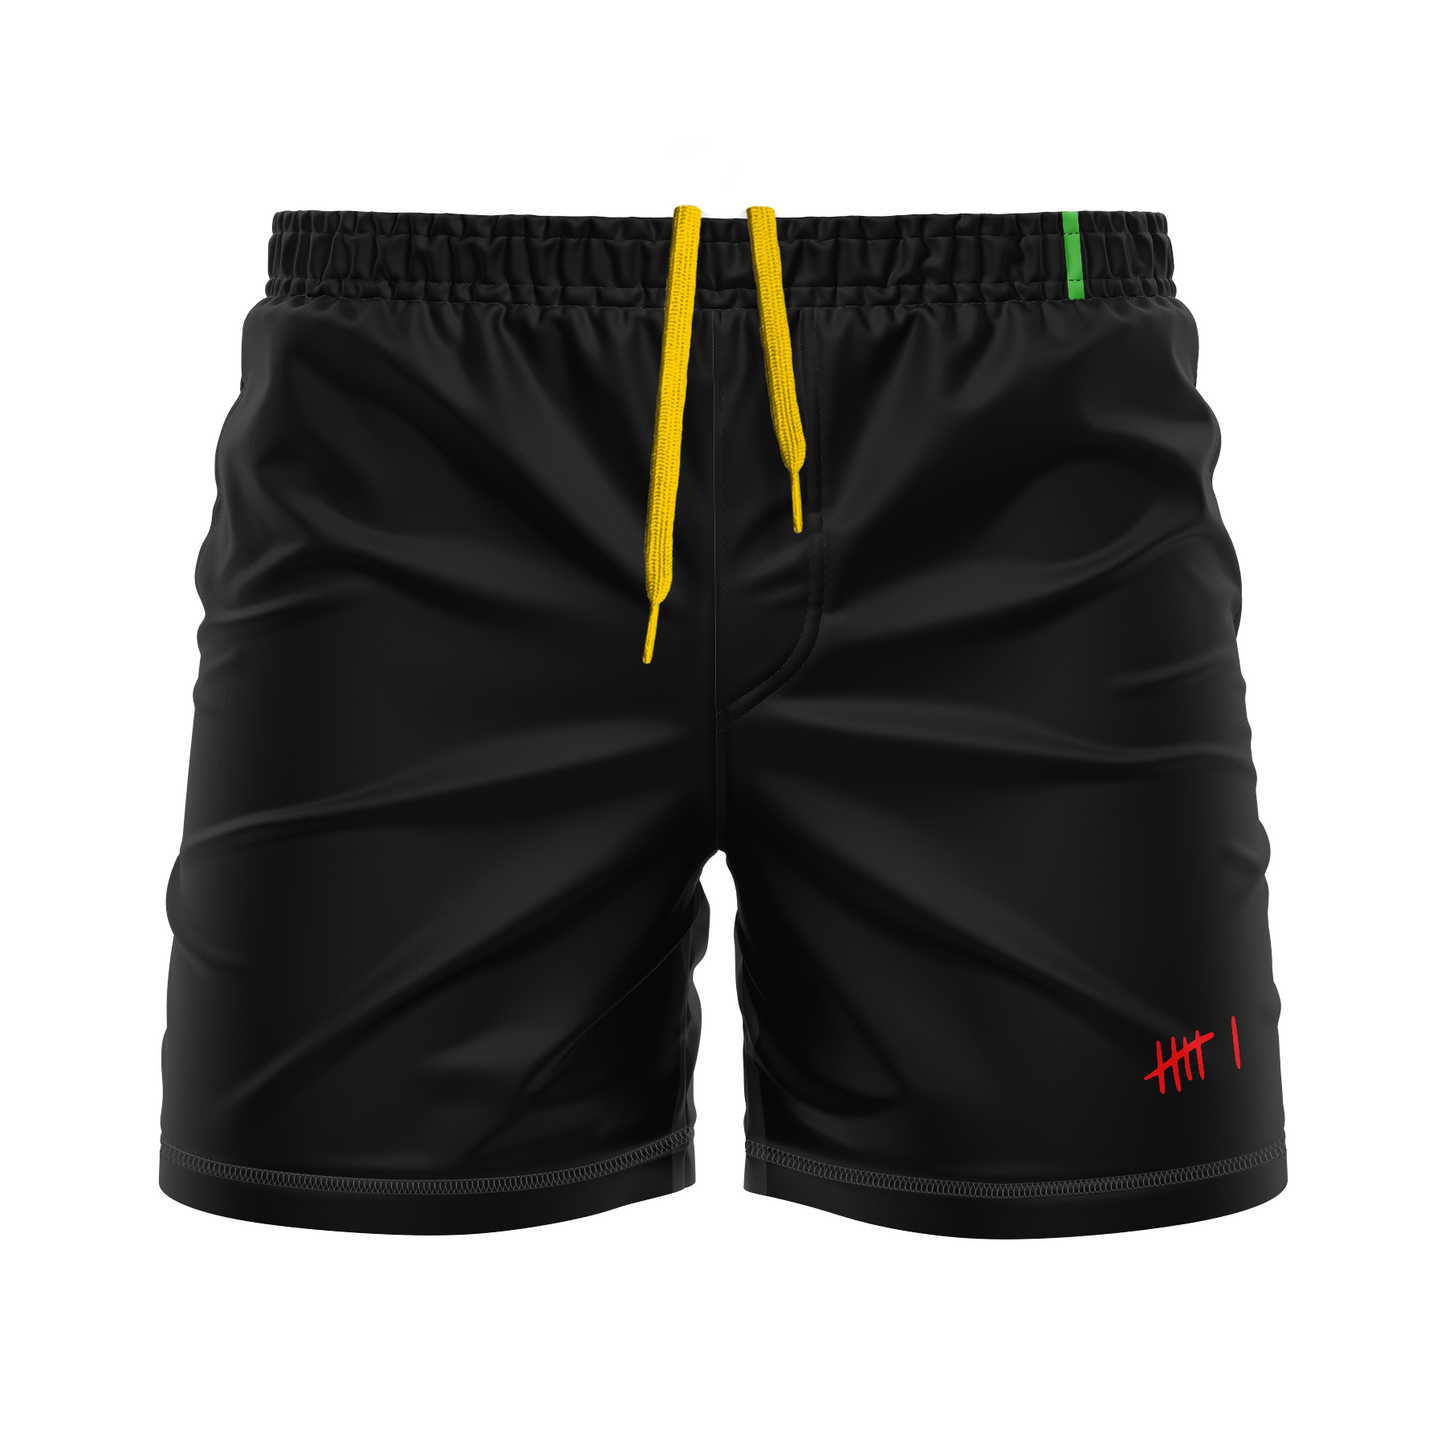 Tracker men's FC shorts, black / red / gold / green